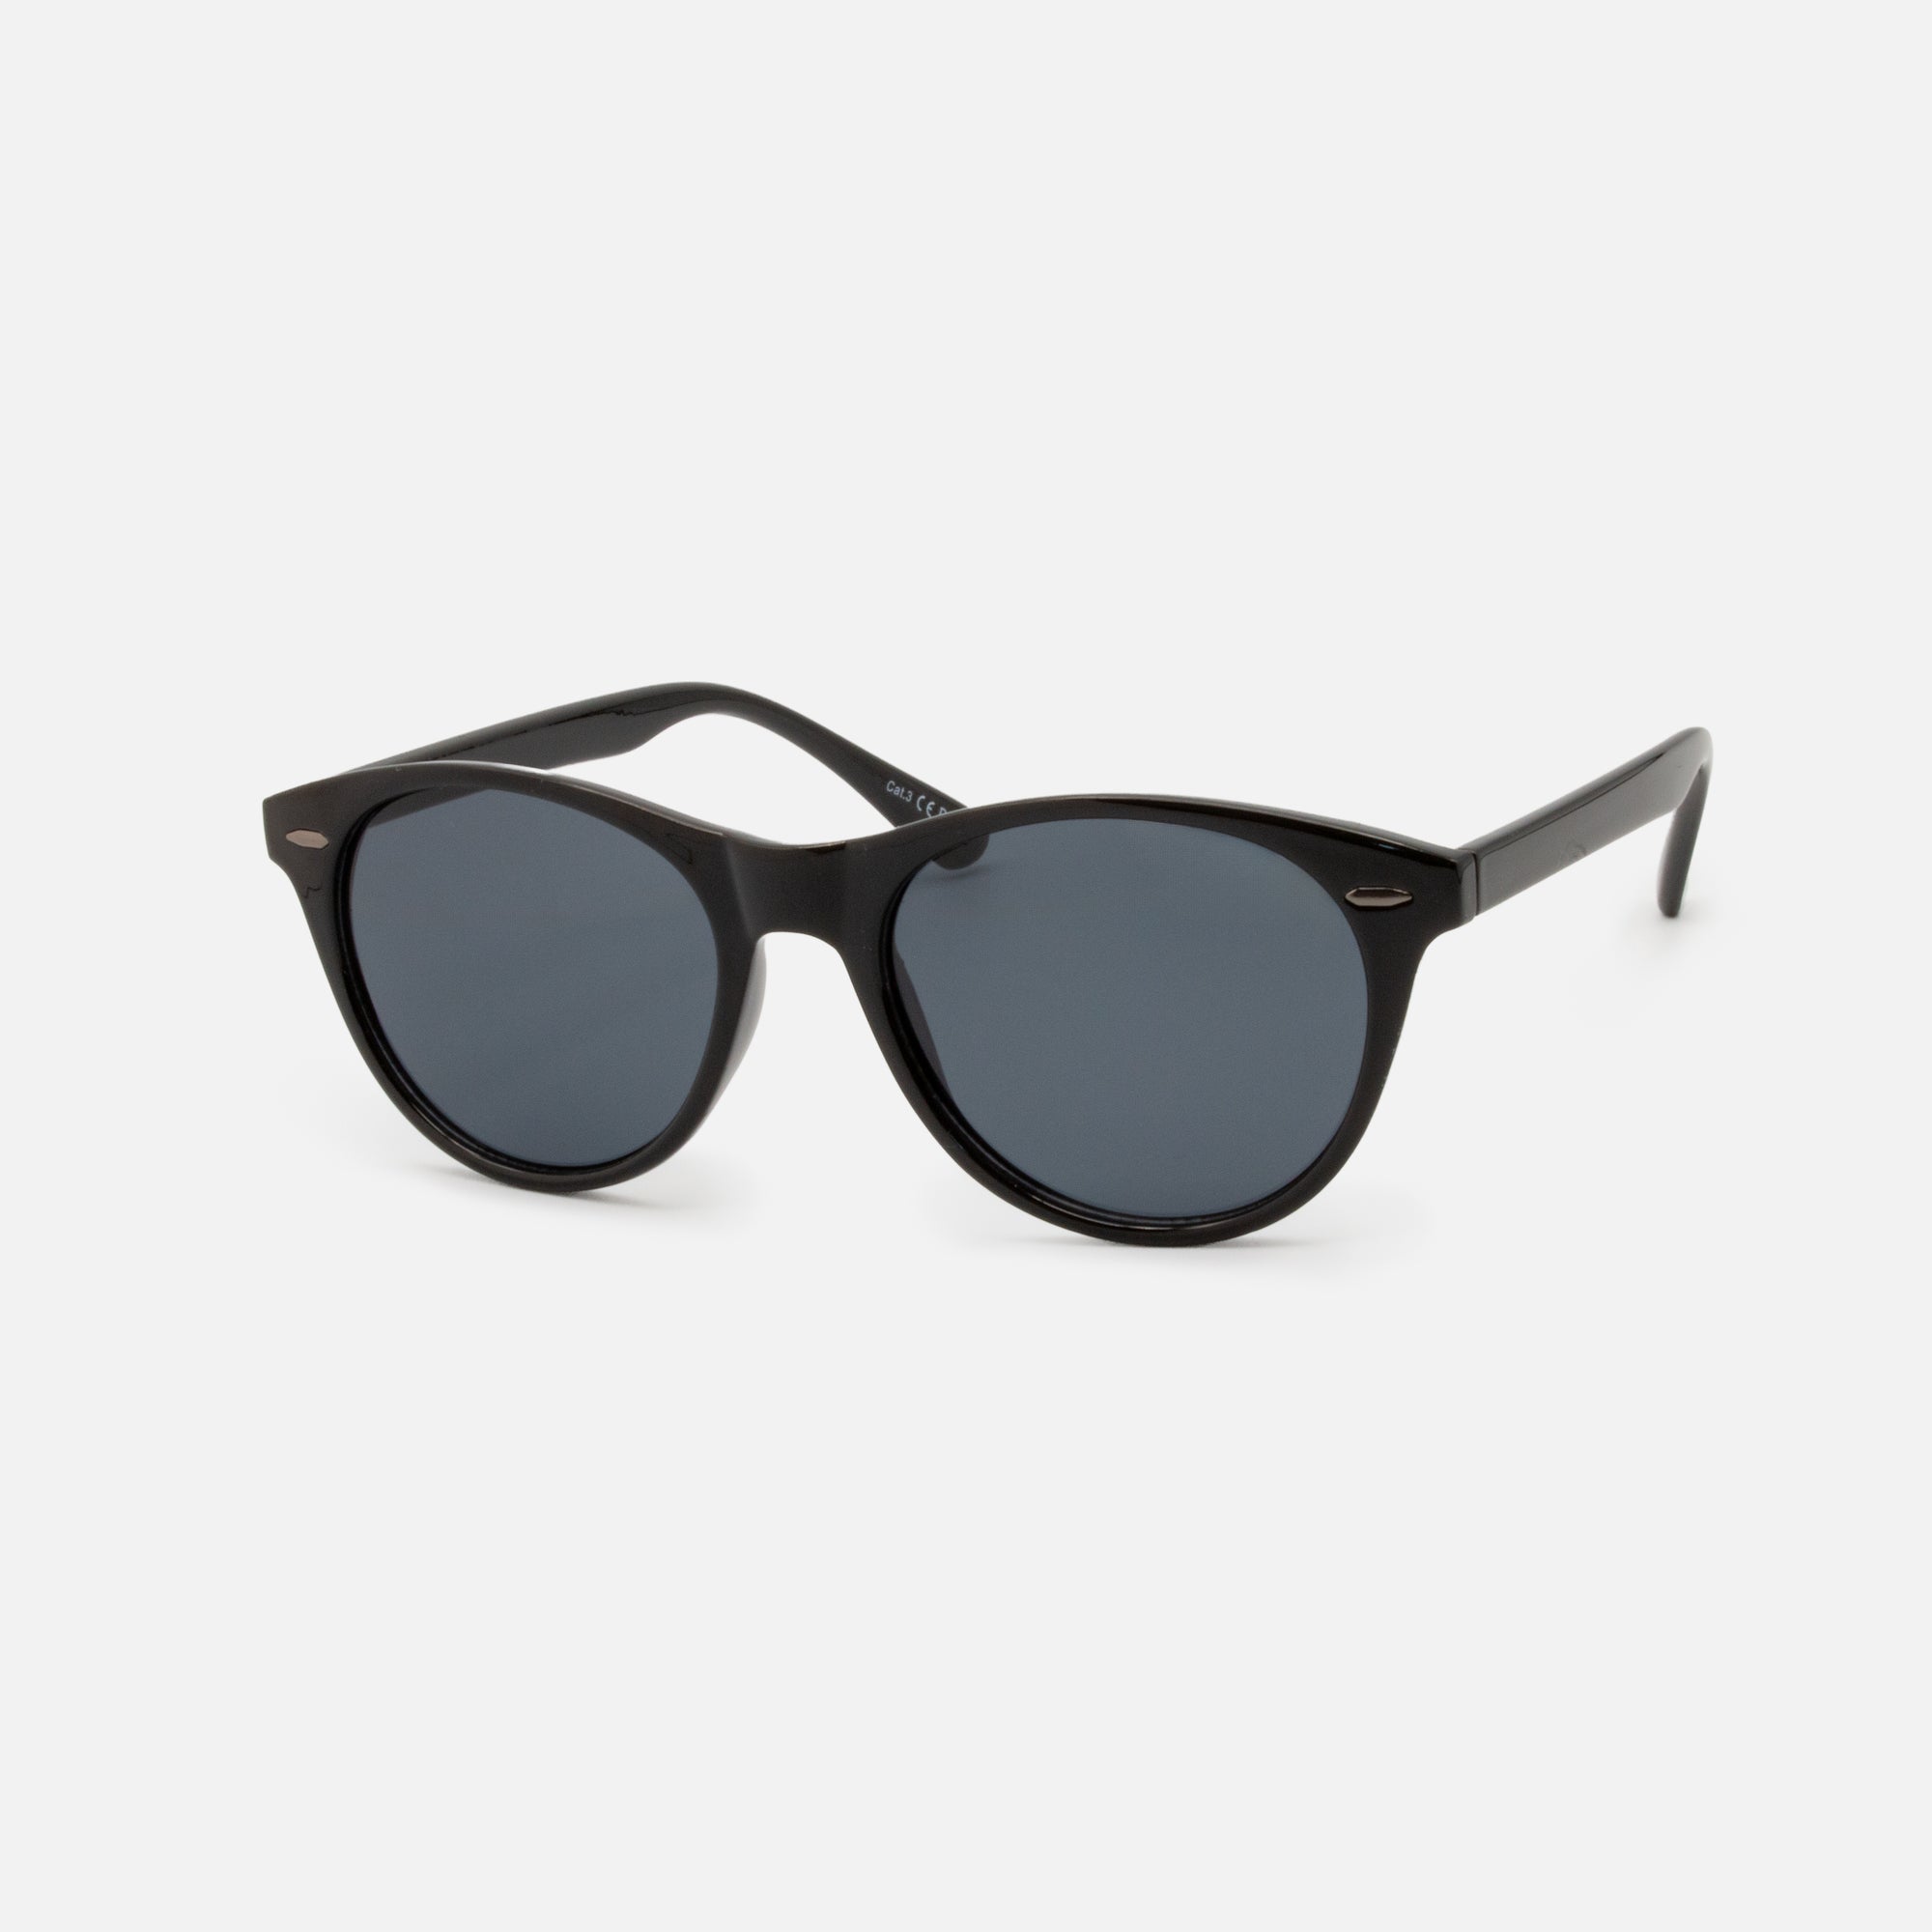 Black sunglasses